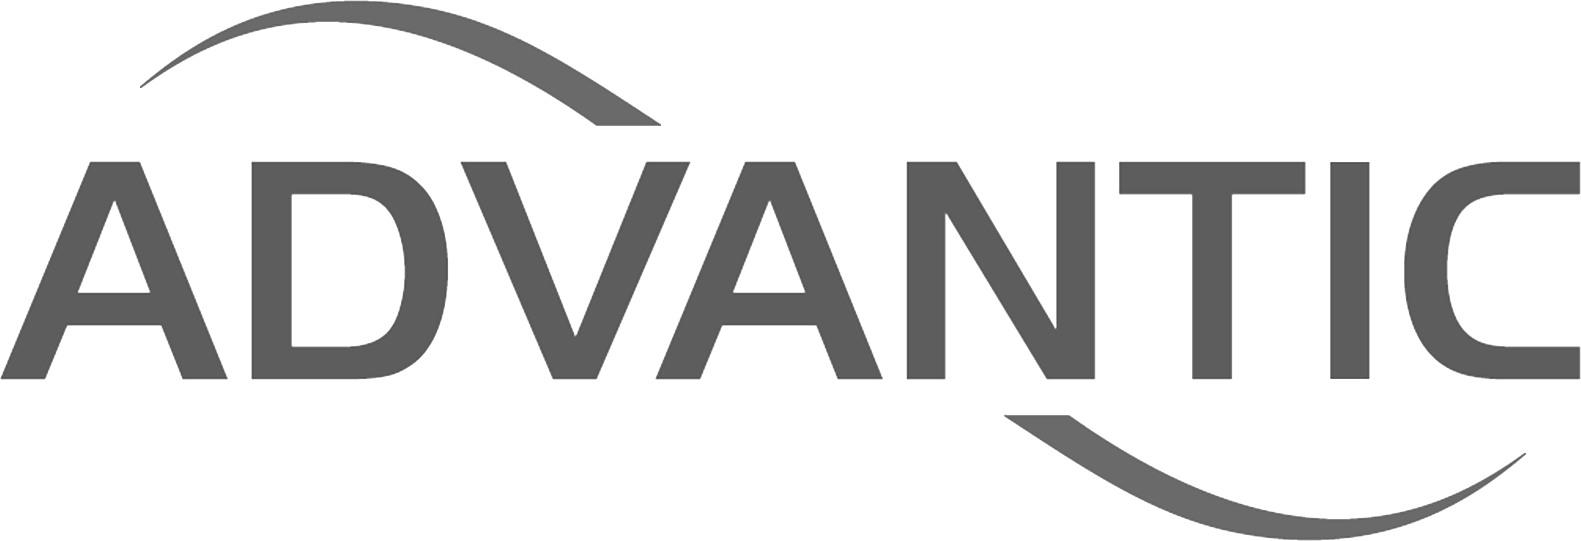 Advantic Logo